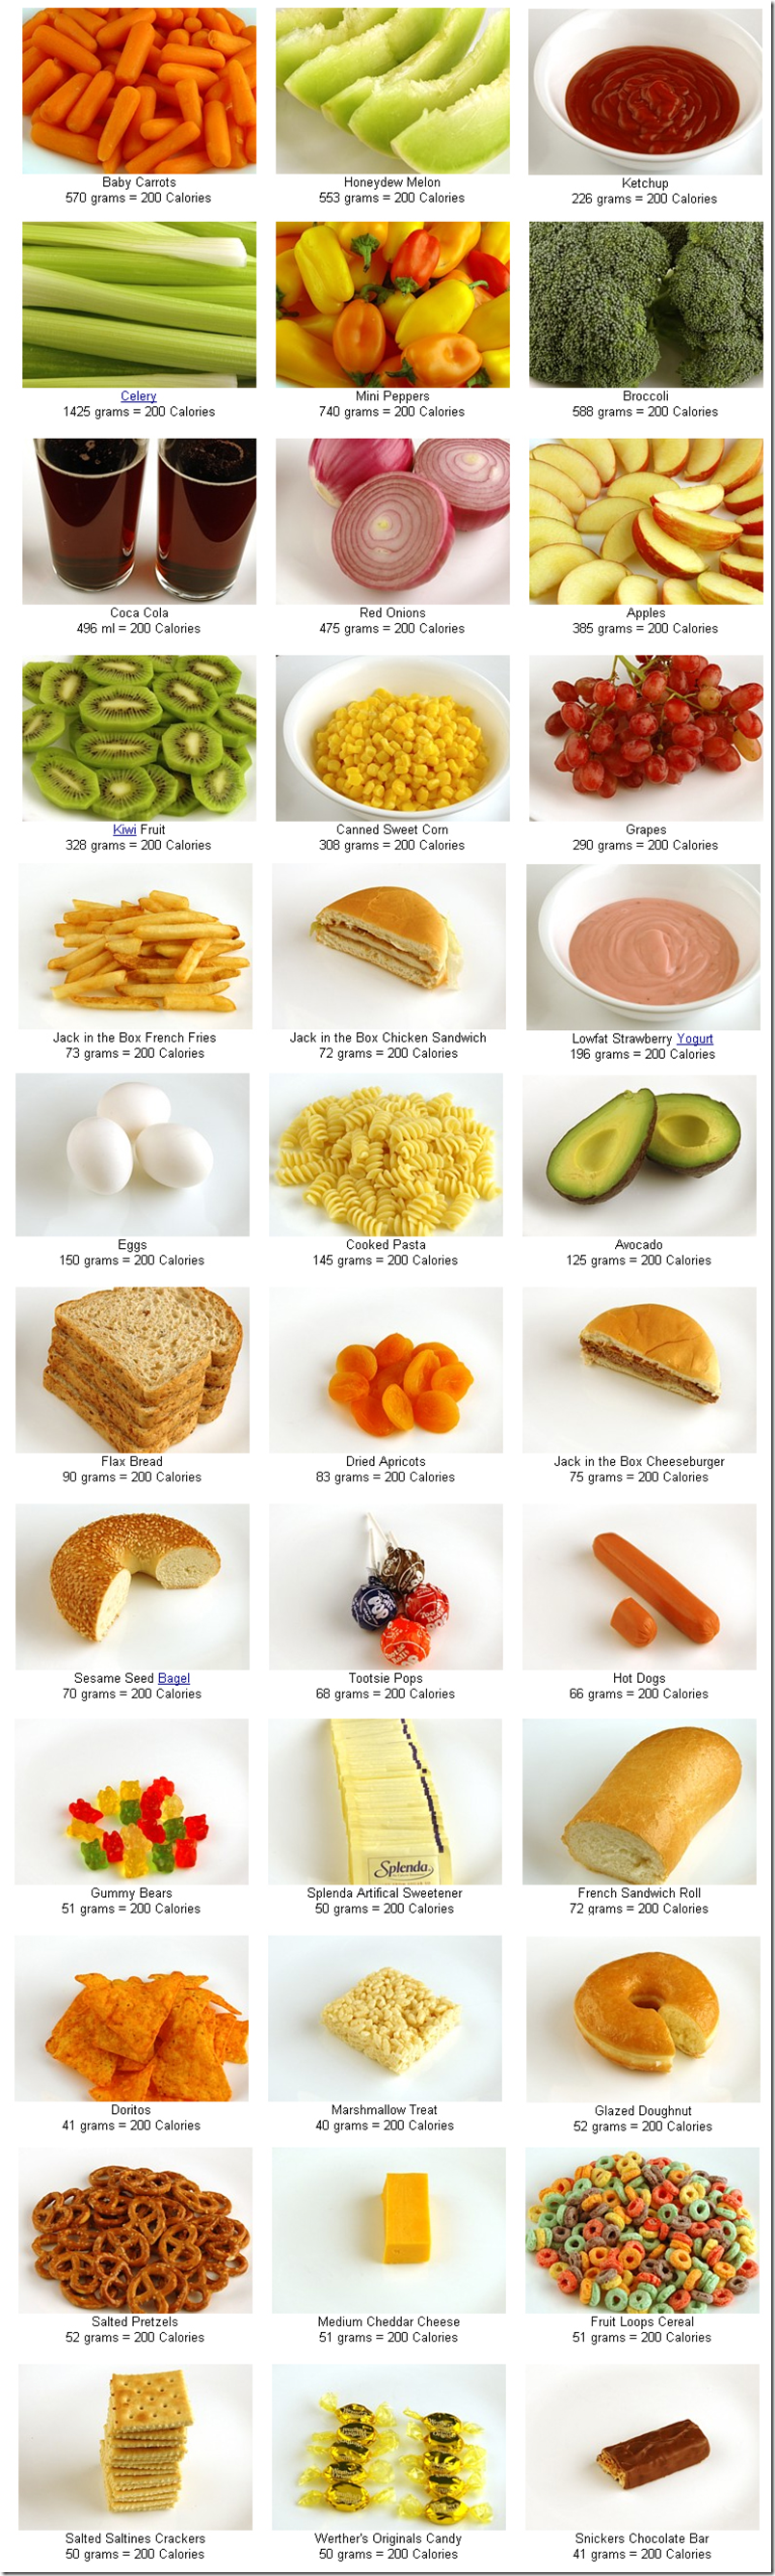 calories in food